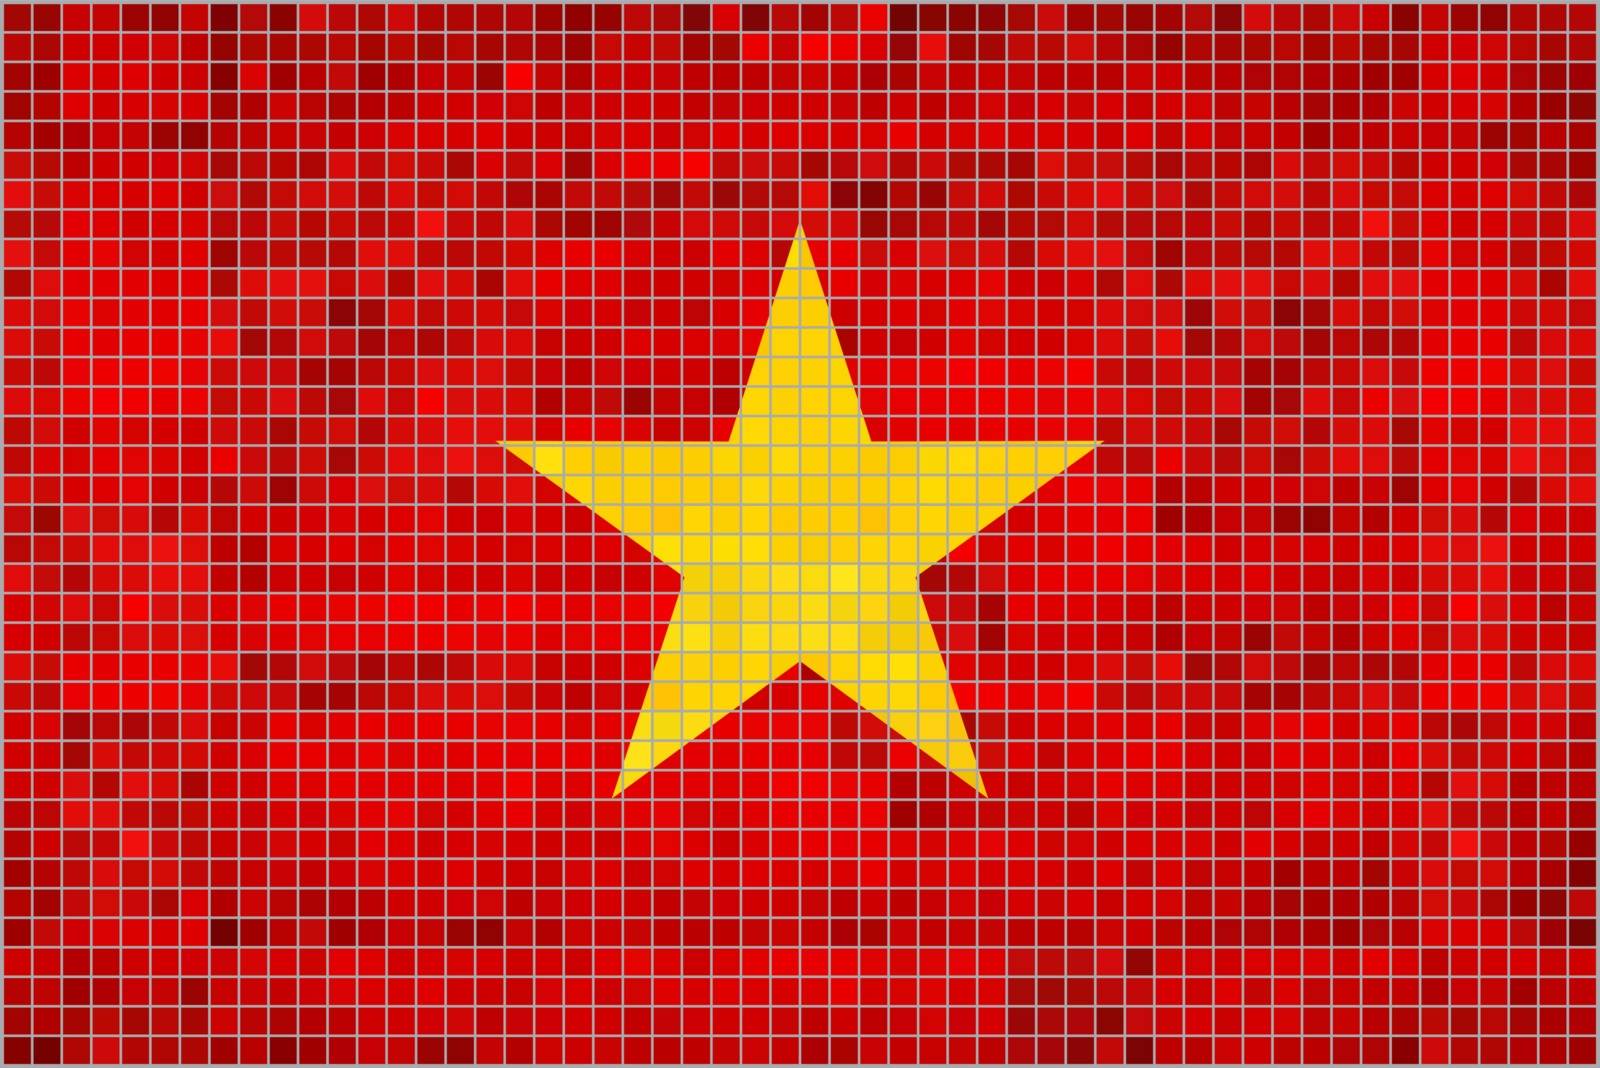 Flag of Vietnam - Illustration, 
Abstract Mosaic Vietnam Flag, 
Grunge mosaic Flag of Vietnam, 
Abstract grunge mosaic vector